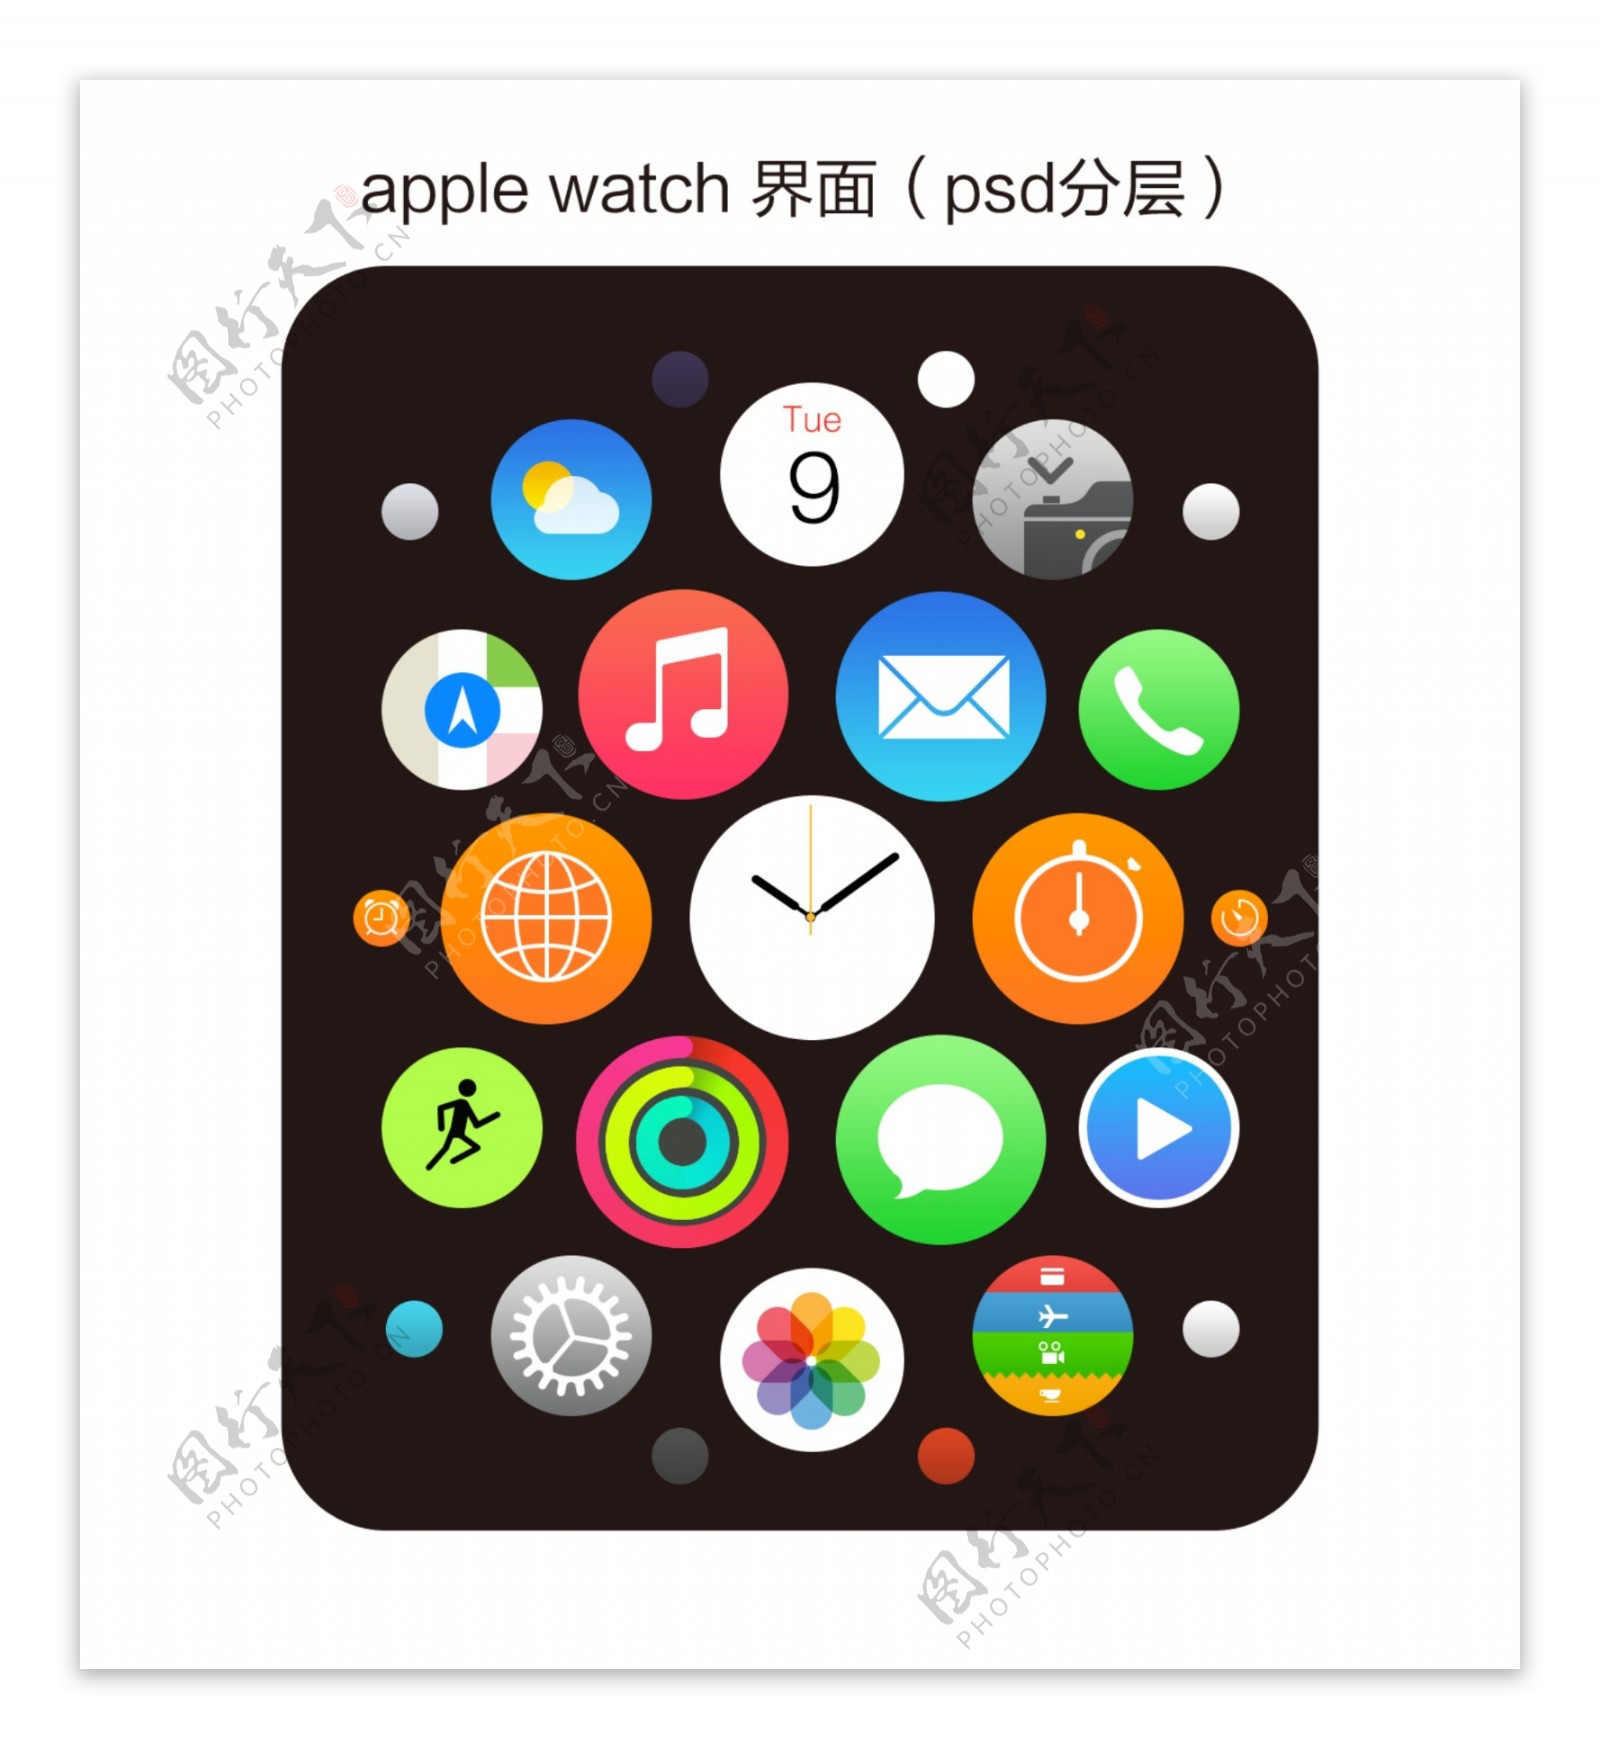 applewatch界面图片